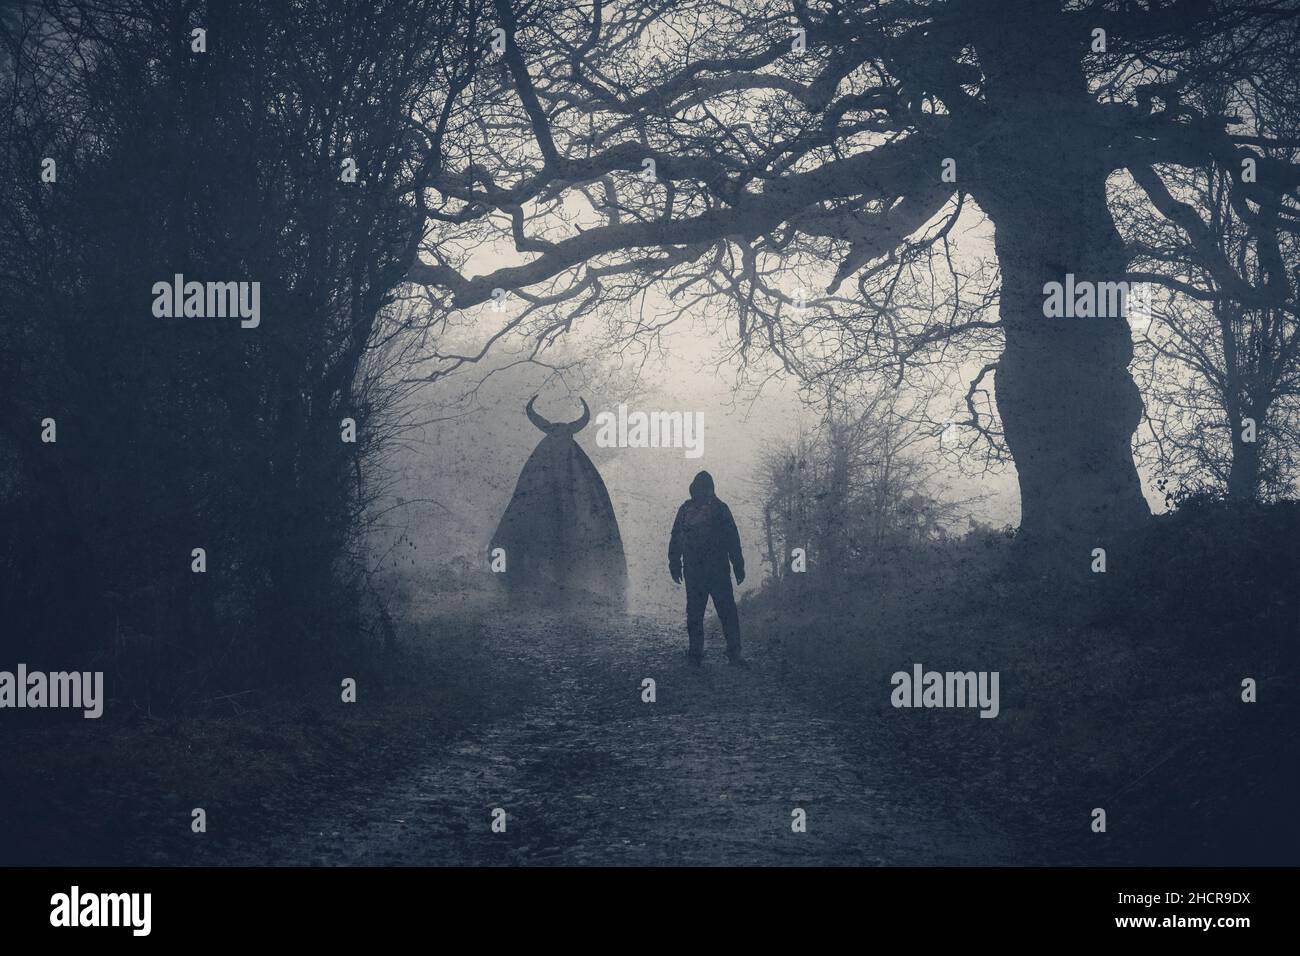 Moonlight zombi stock photo. Image of demon, mist, gothic - 28590770